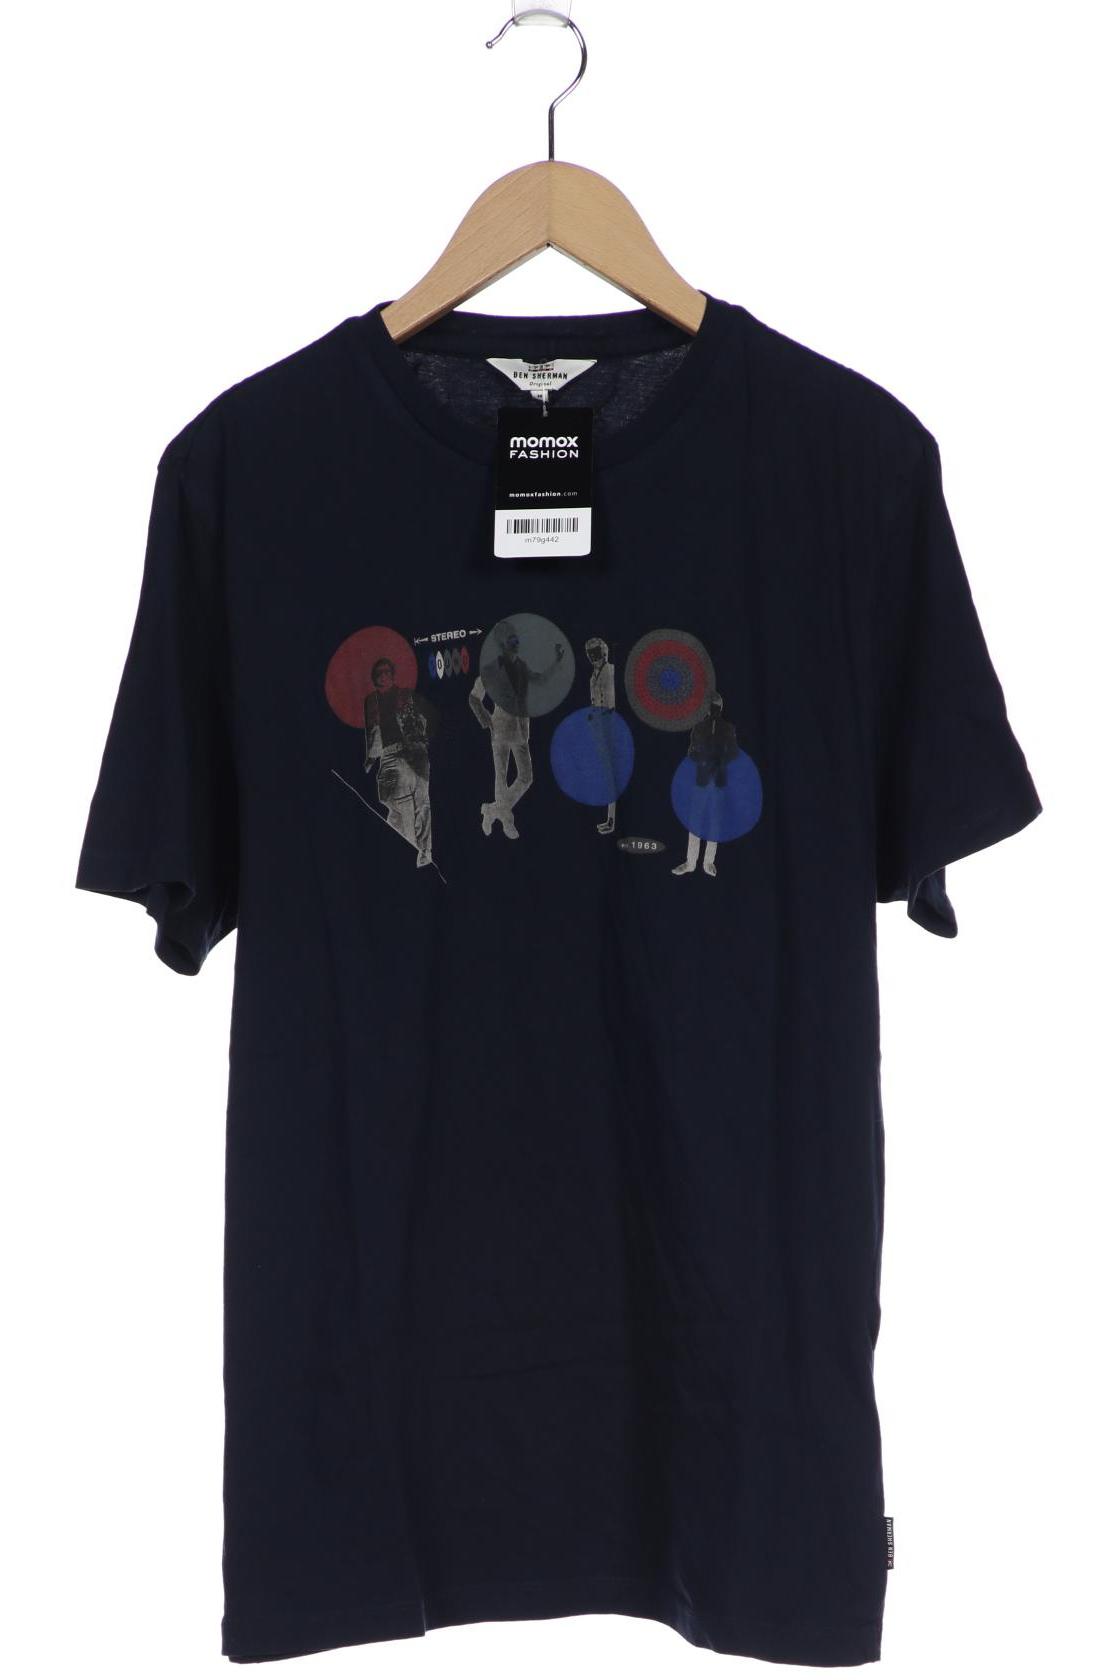 Ben Sherman Herren T-Shirt, marineblau von Ben Sherman